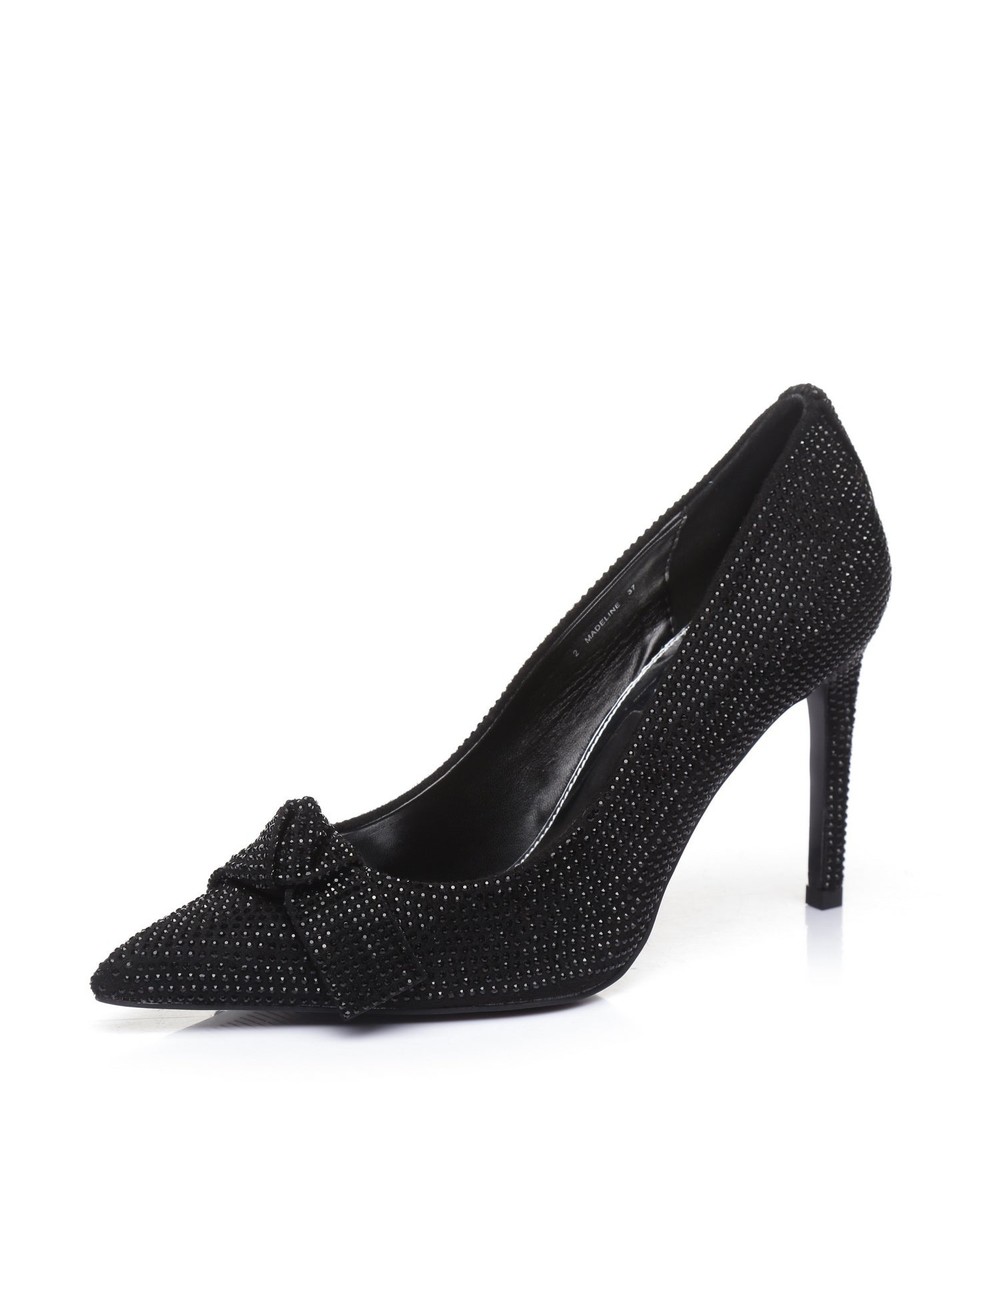 Giaro ALIA BLACK MATTE ANKLE BOOTS - Giaro High Heels | Official store ...